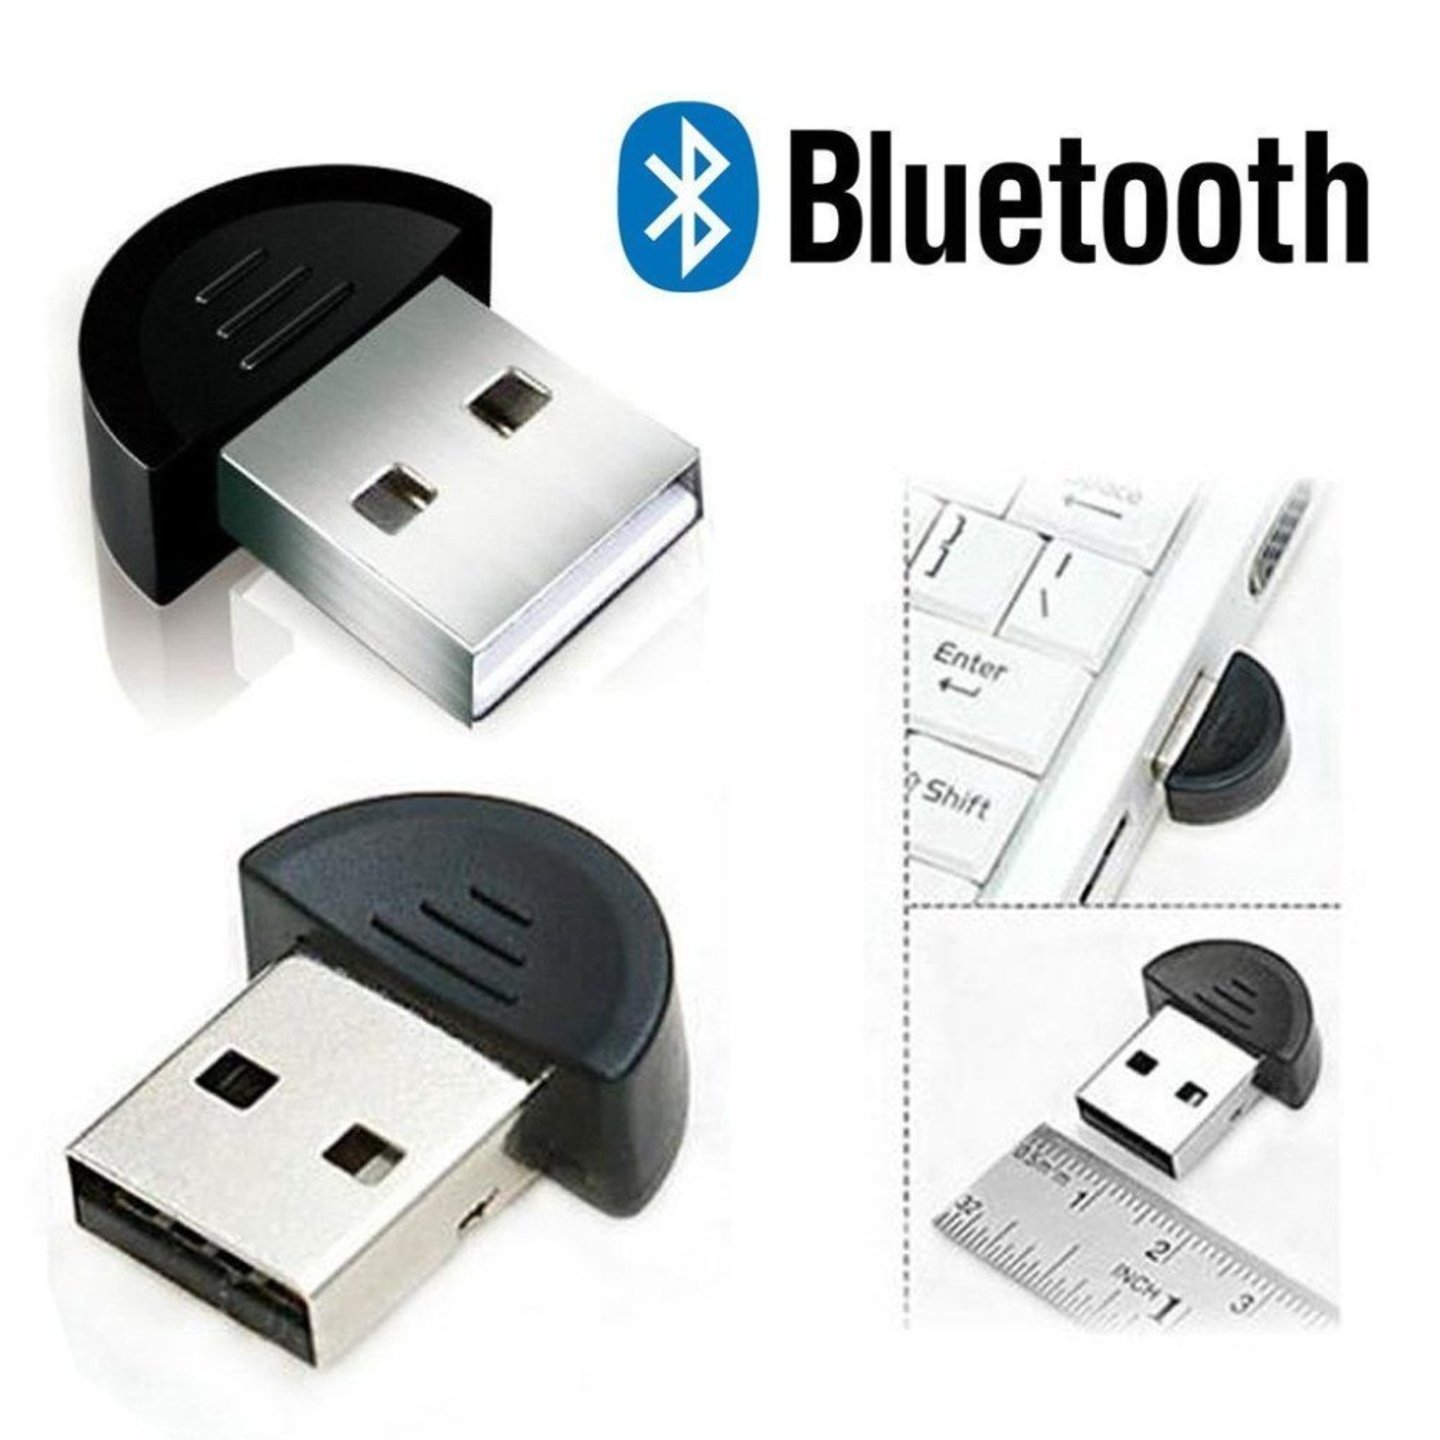  Bluetooth USB Dongle 2.0